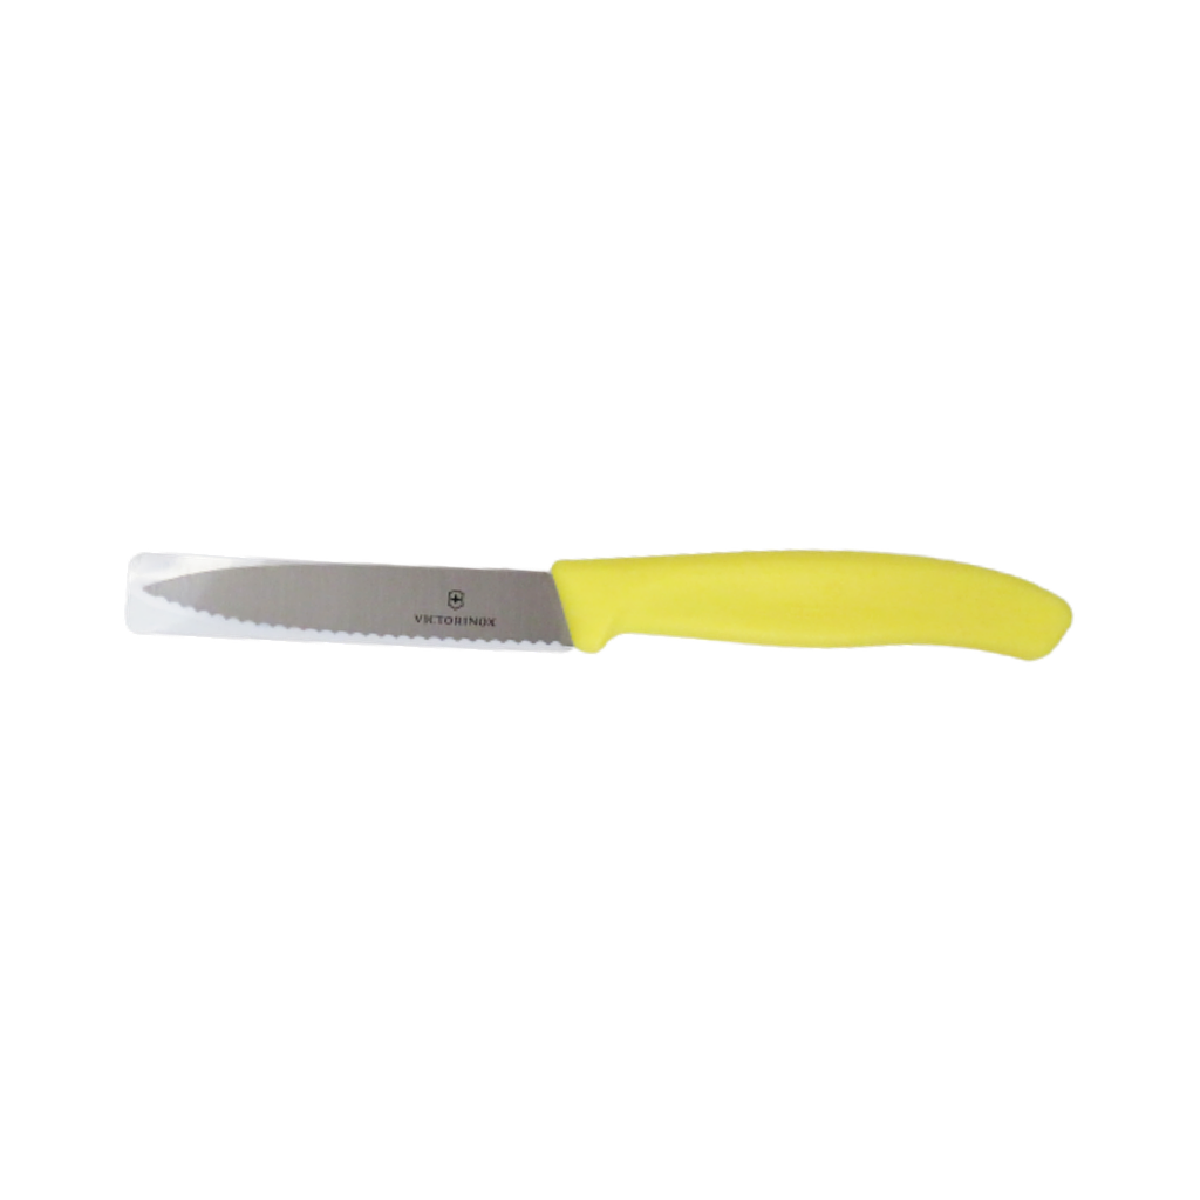 Victorinox Classic Pairing Knife in Yellow